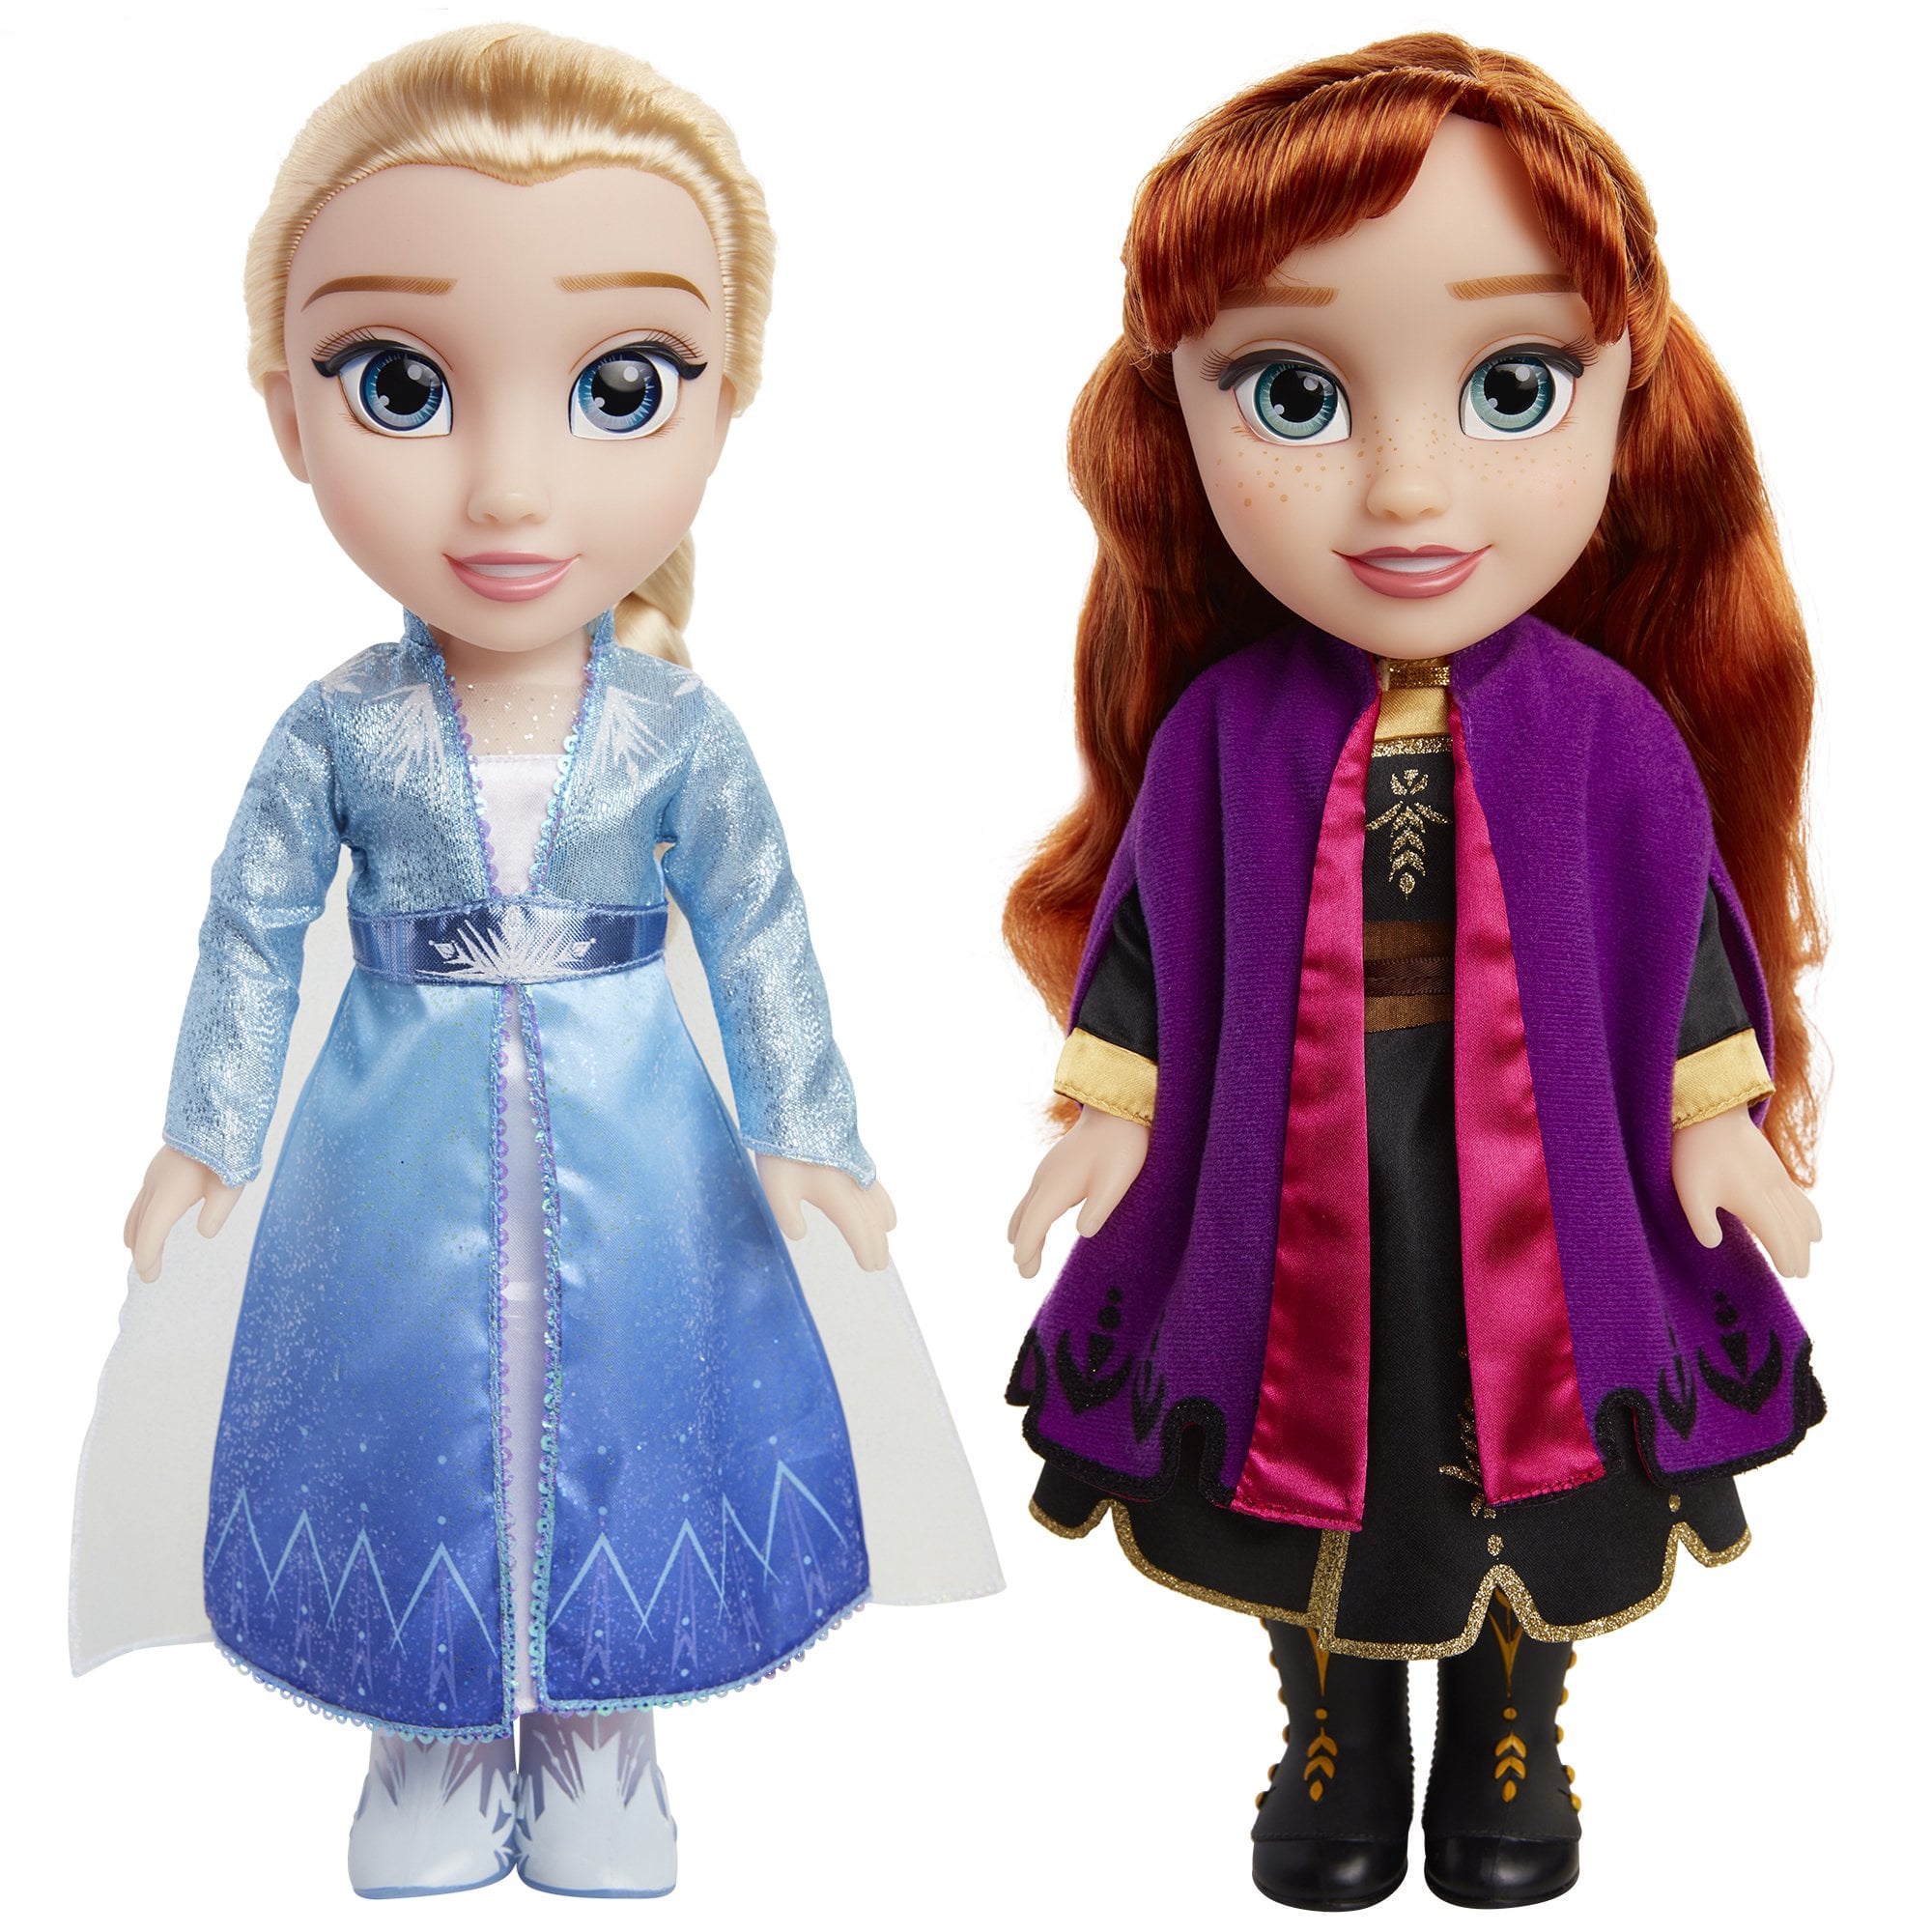 frozen princess toys